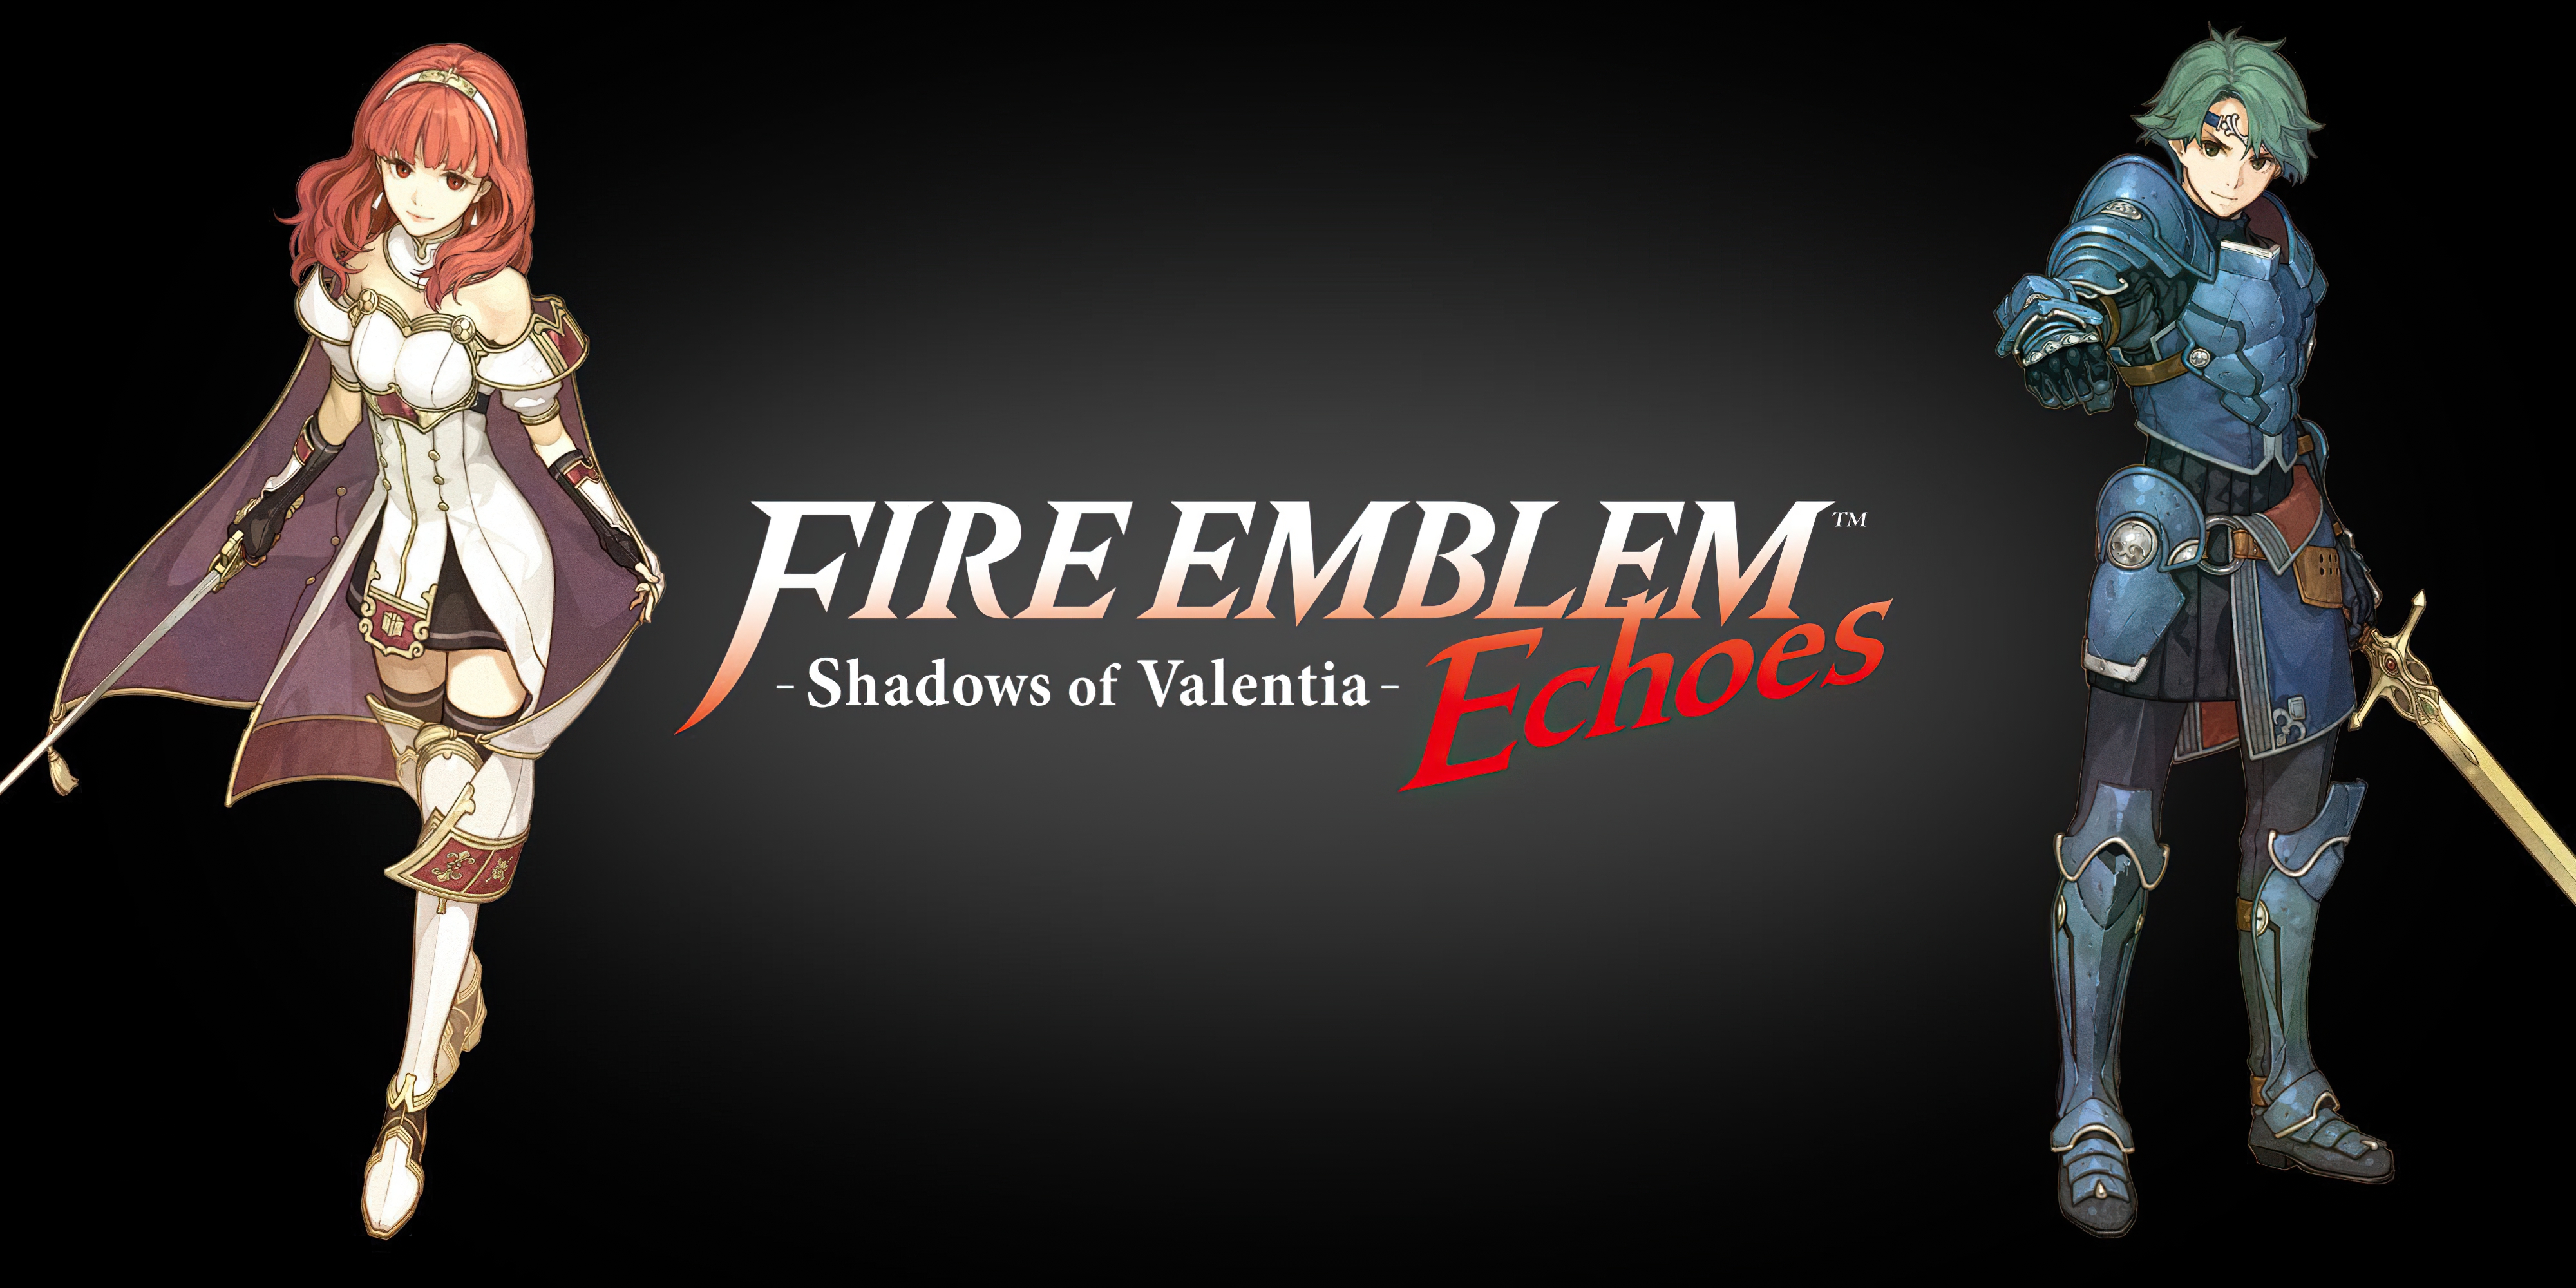 Nintendo fire emblem. Fire Emblem Echoes: Shadows of Valentia. Fire Emblem Shadow of Valentia. Fire Emblem Echoes. Fire Emblem Echoes: тени Валентии.